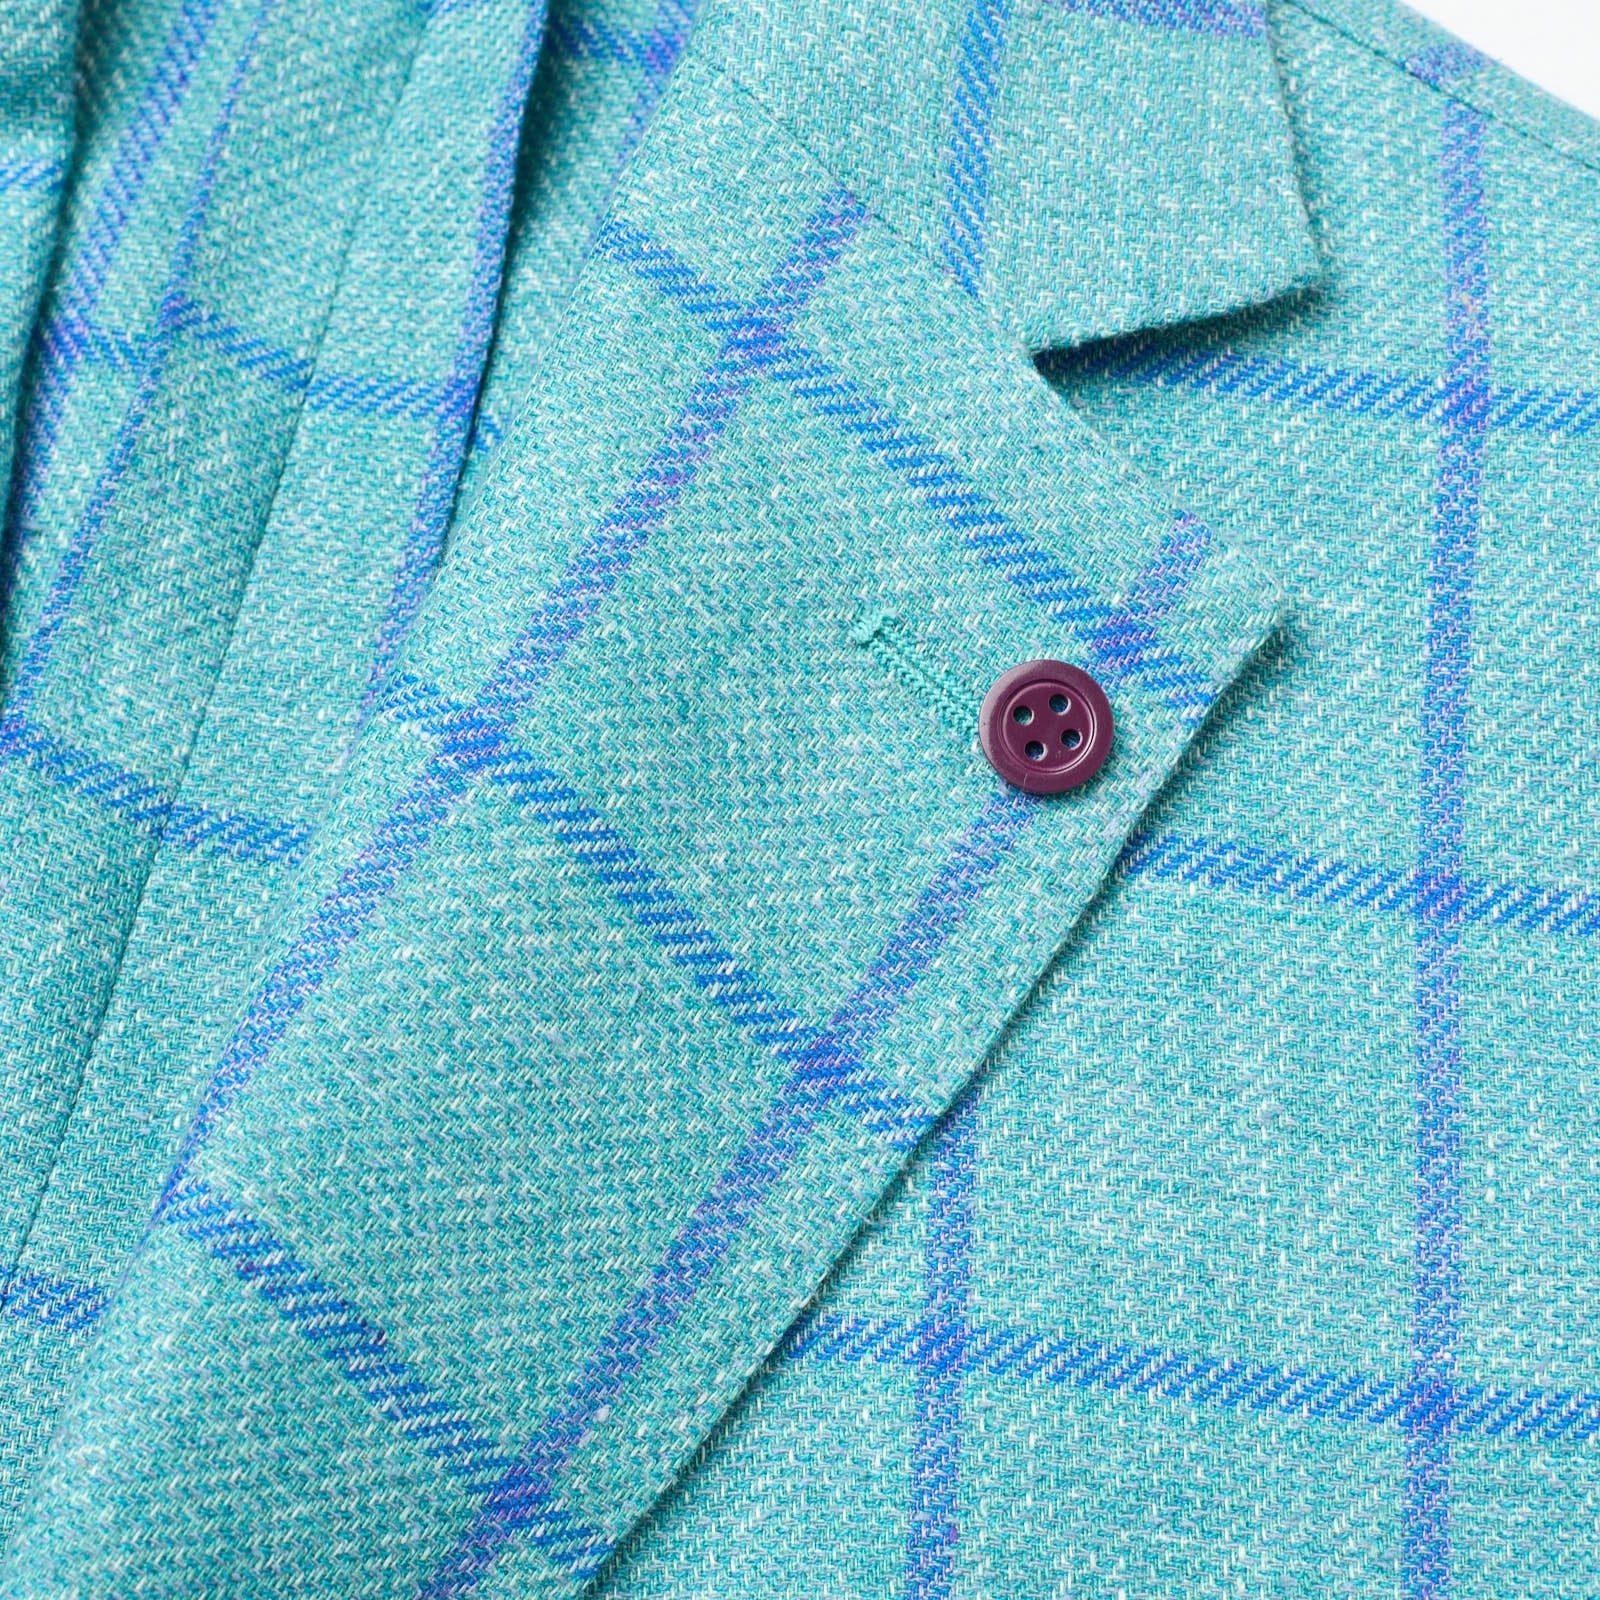 SARTORIA PARTENOPEA Turquoise Windowpane Linen-Wool-Silk Jacket NEW Current Model